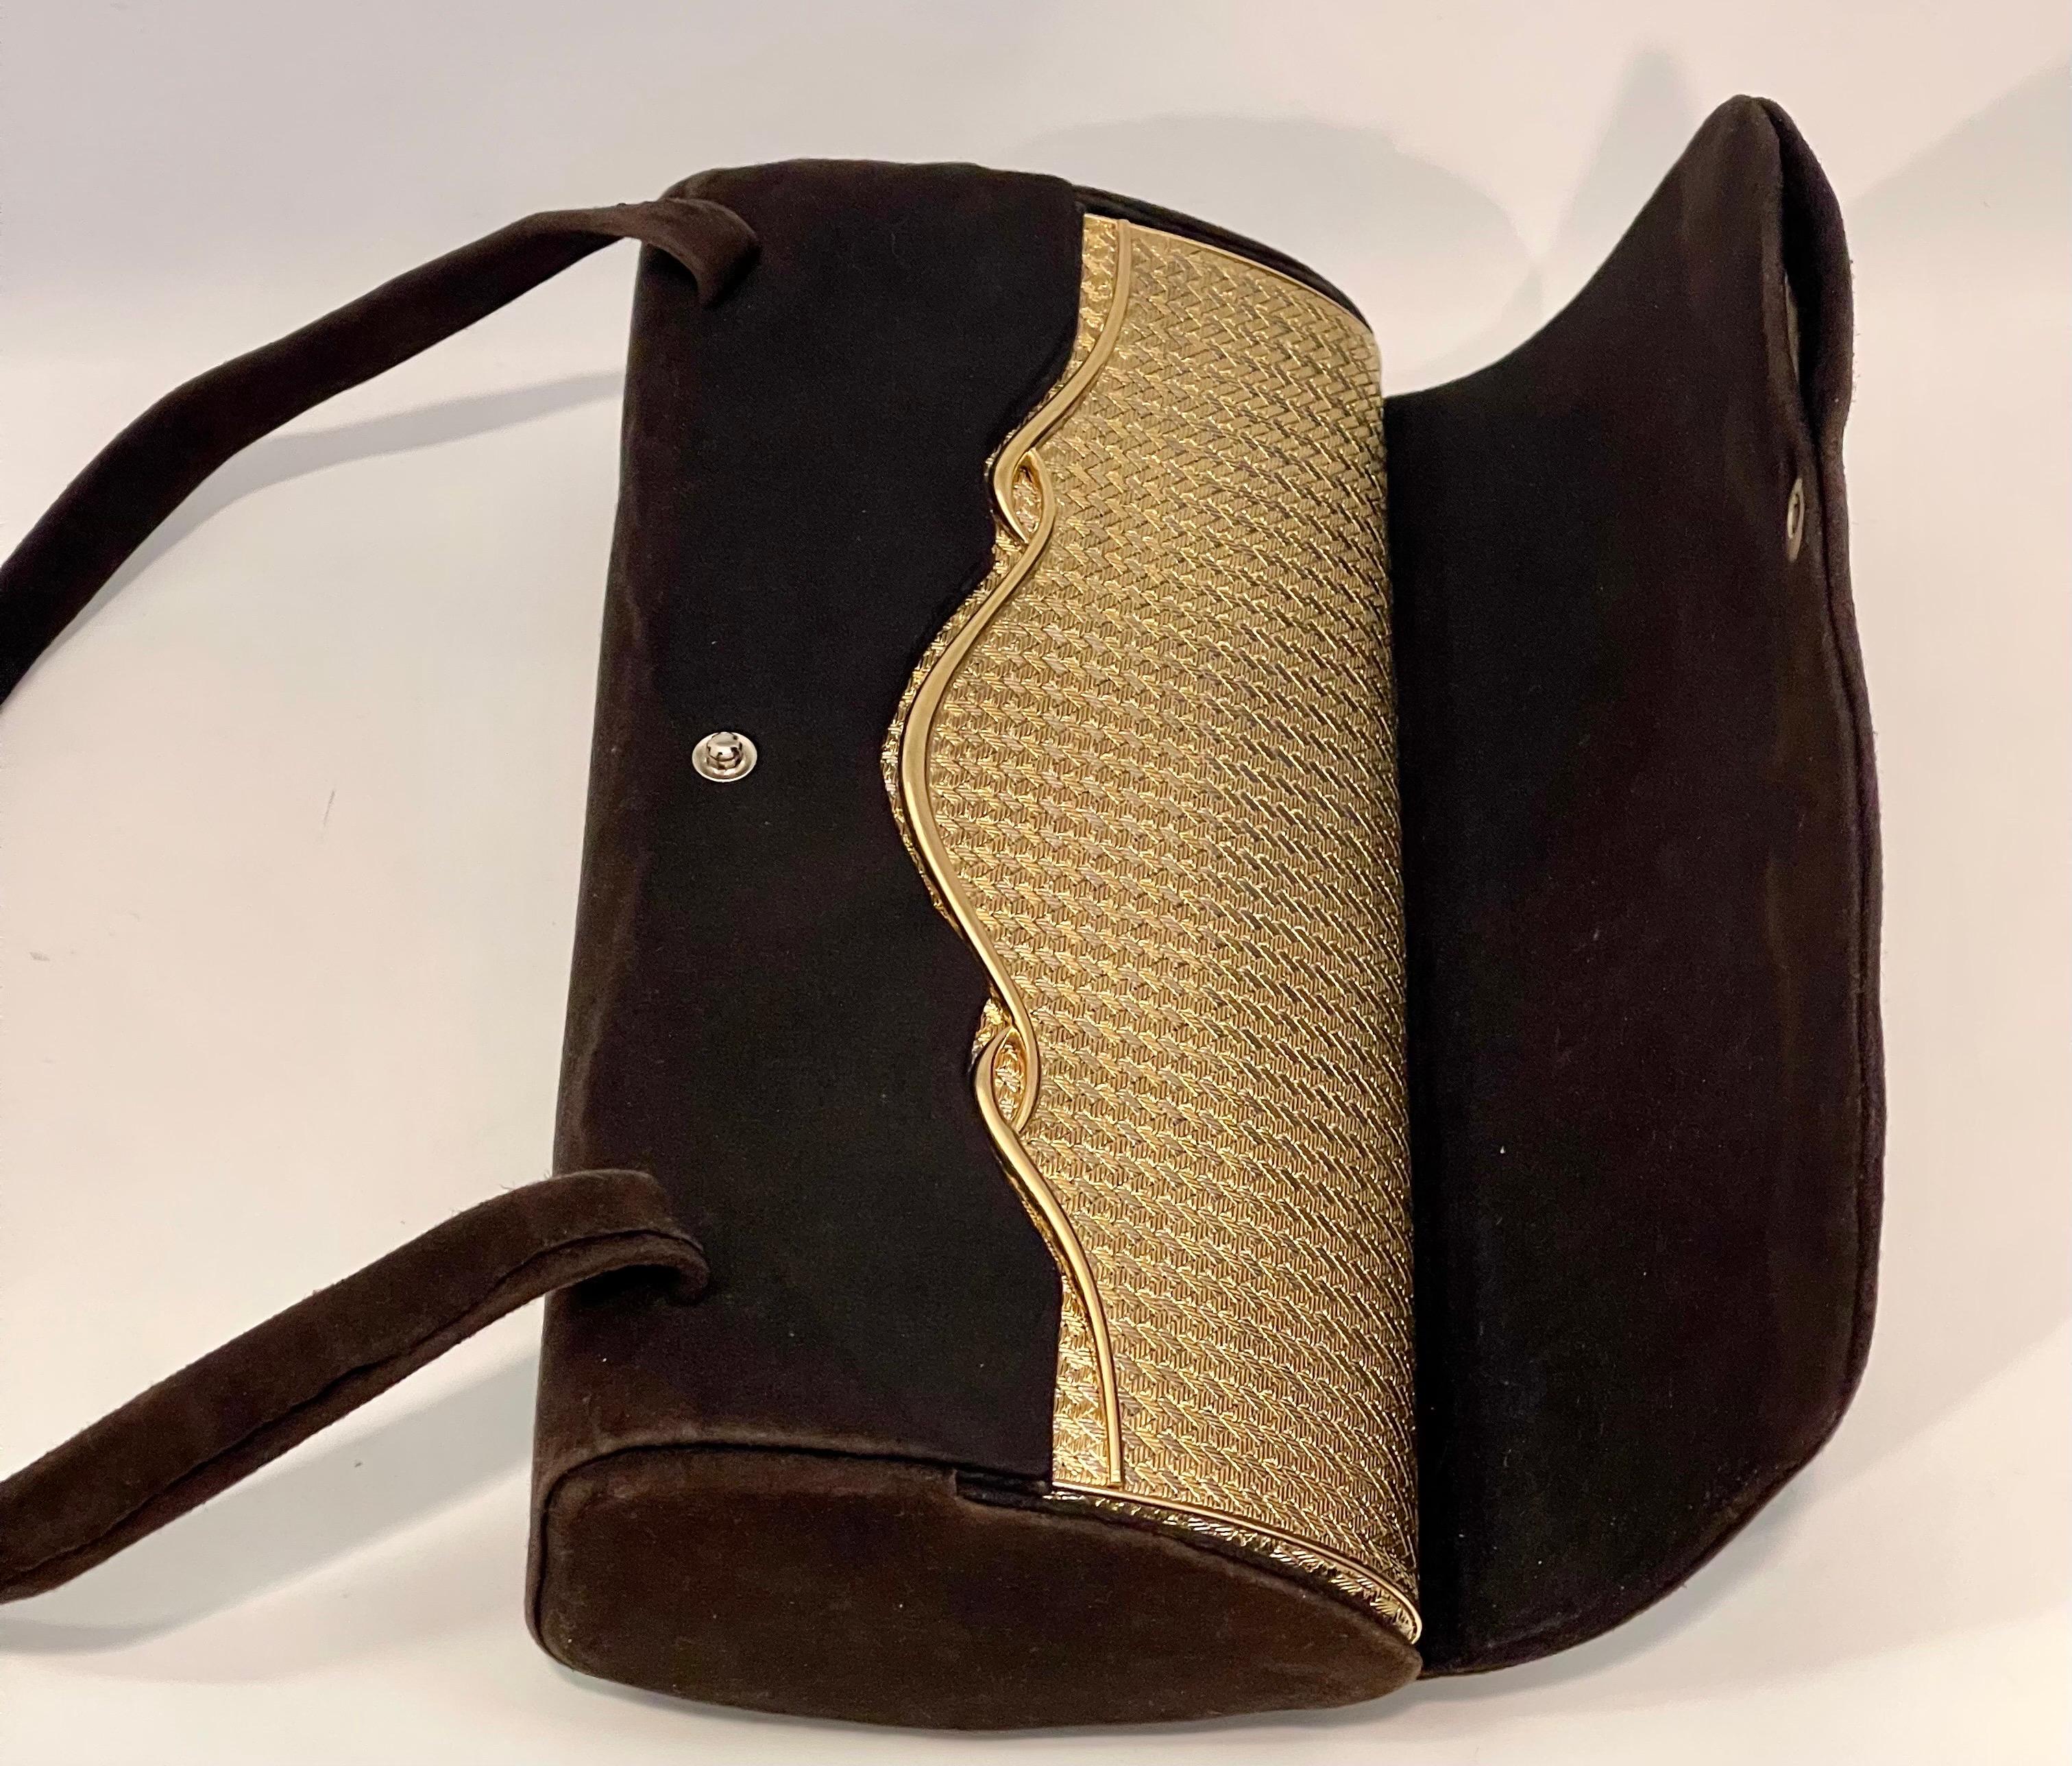 Van Cleef & Arpels 18K Yellow Gold Mesh Clutch Handbag with Mirror Inside, Rare For Sale 4